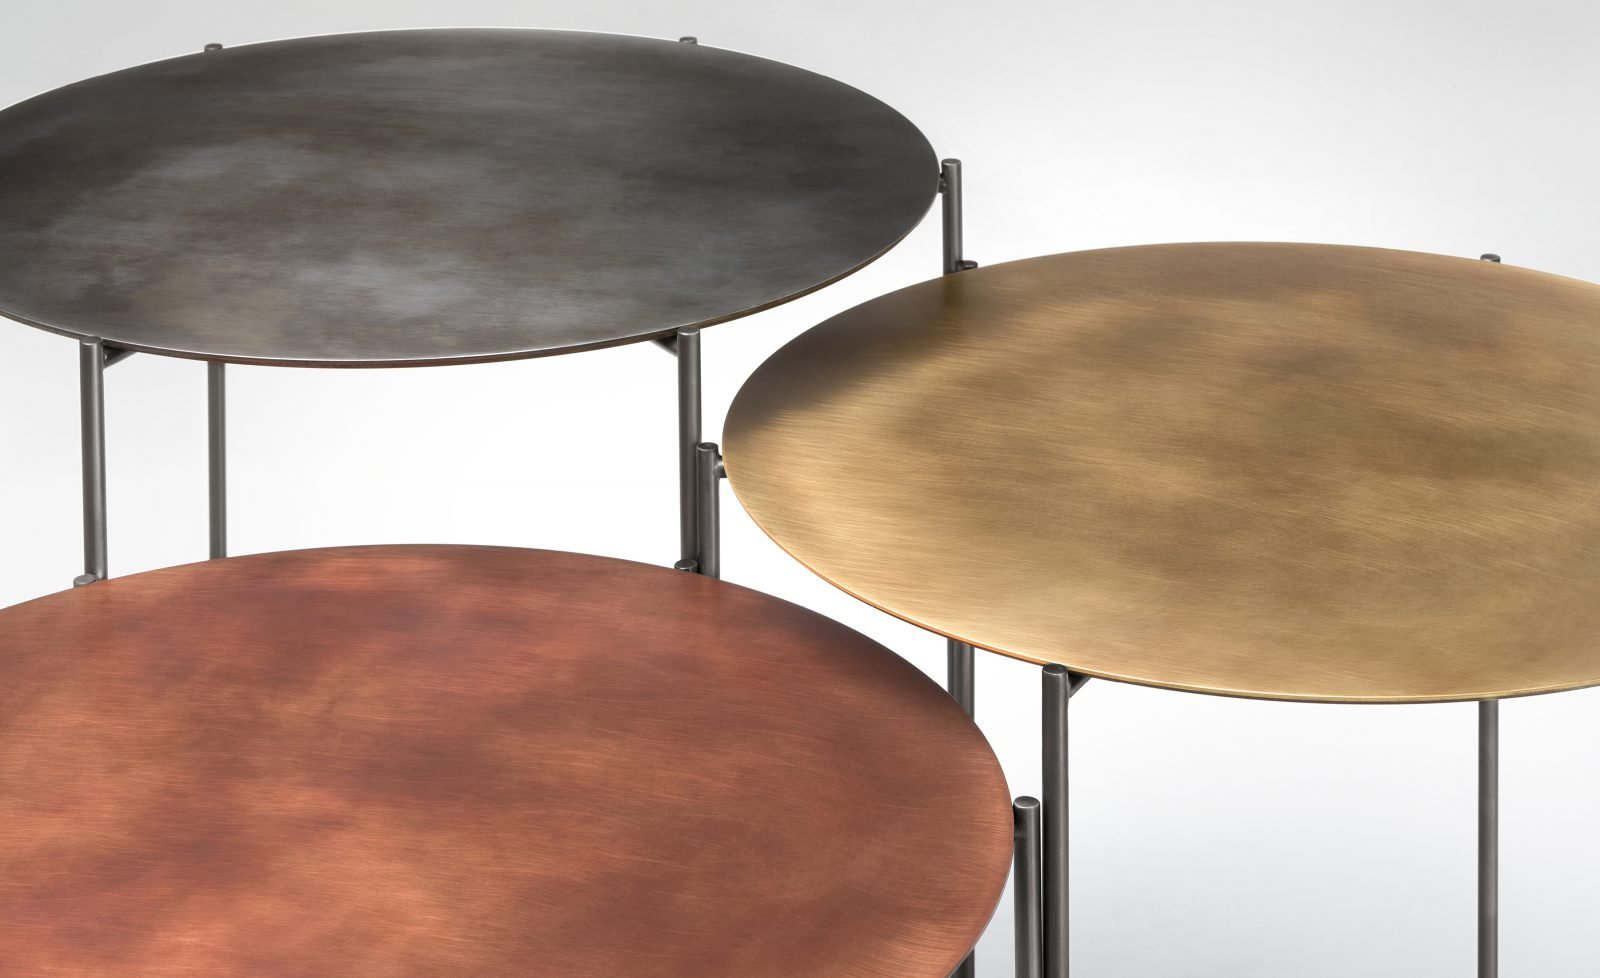 Band Table end from De Castelli, designed by Baldessari&Baldessari